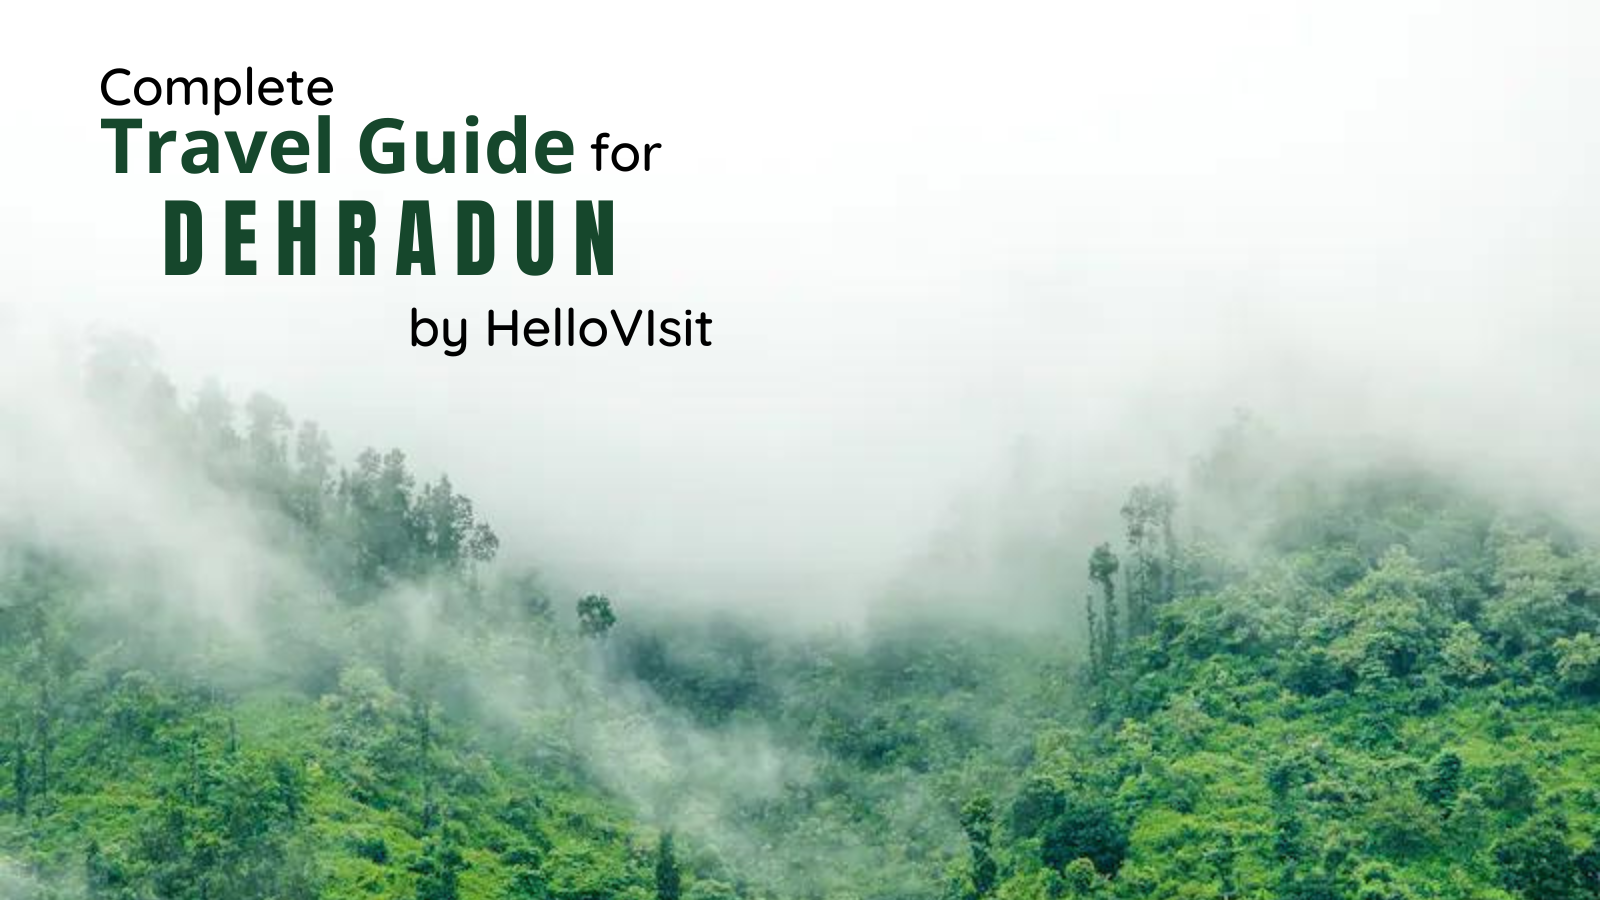 dehradun travel guide price